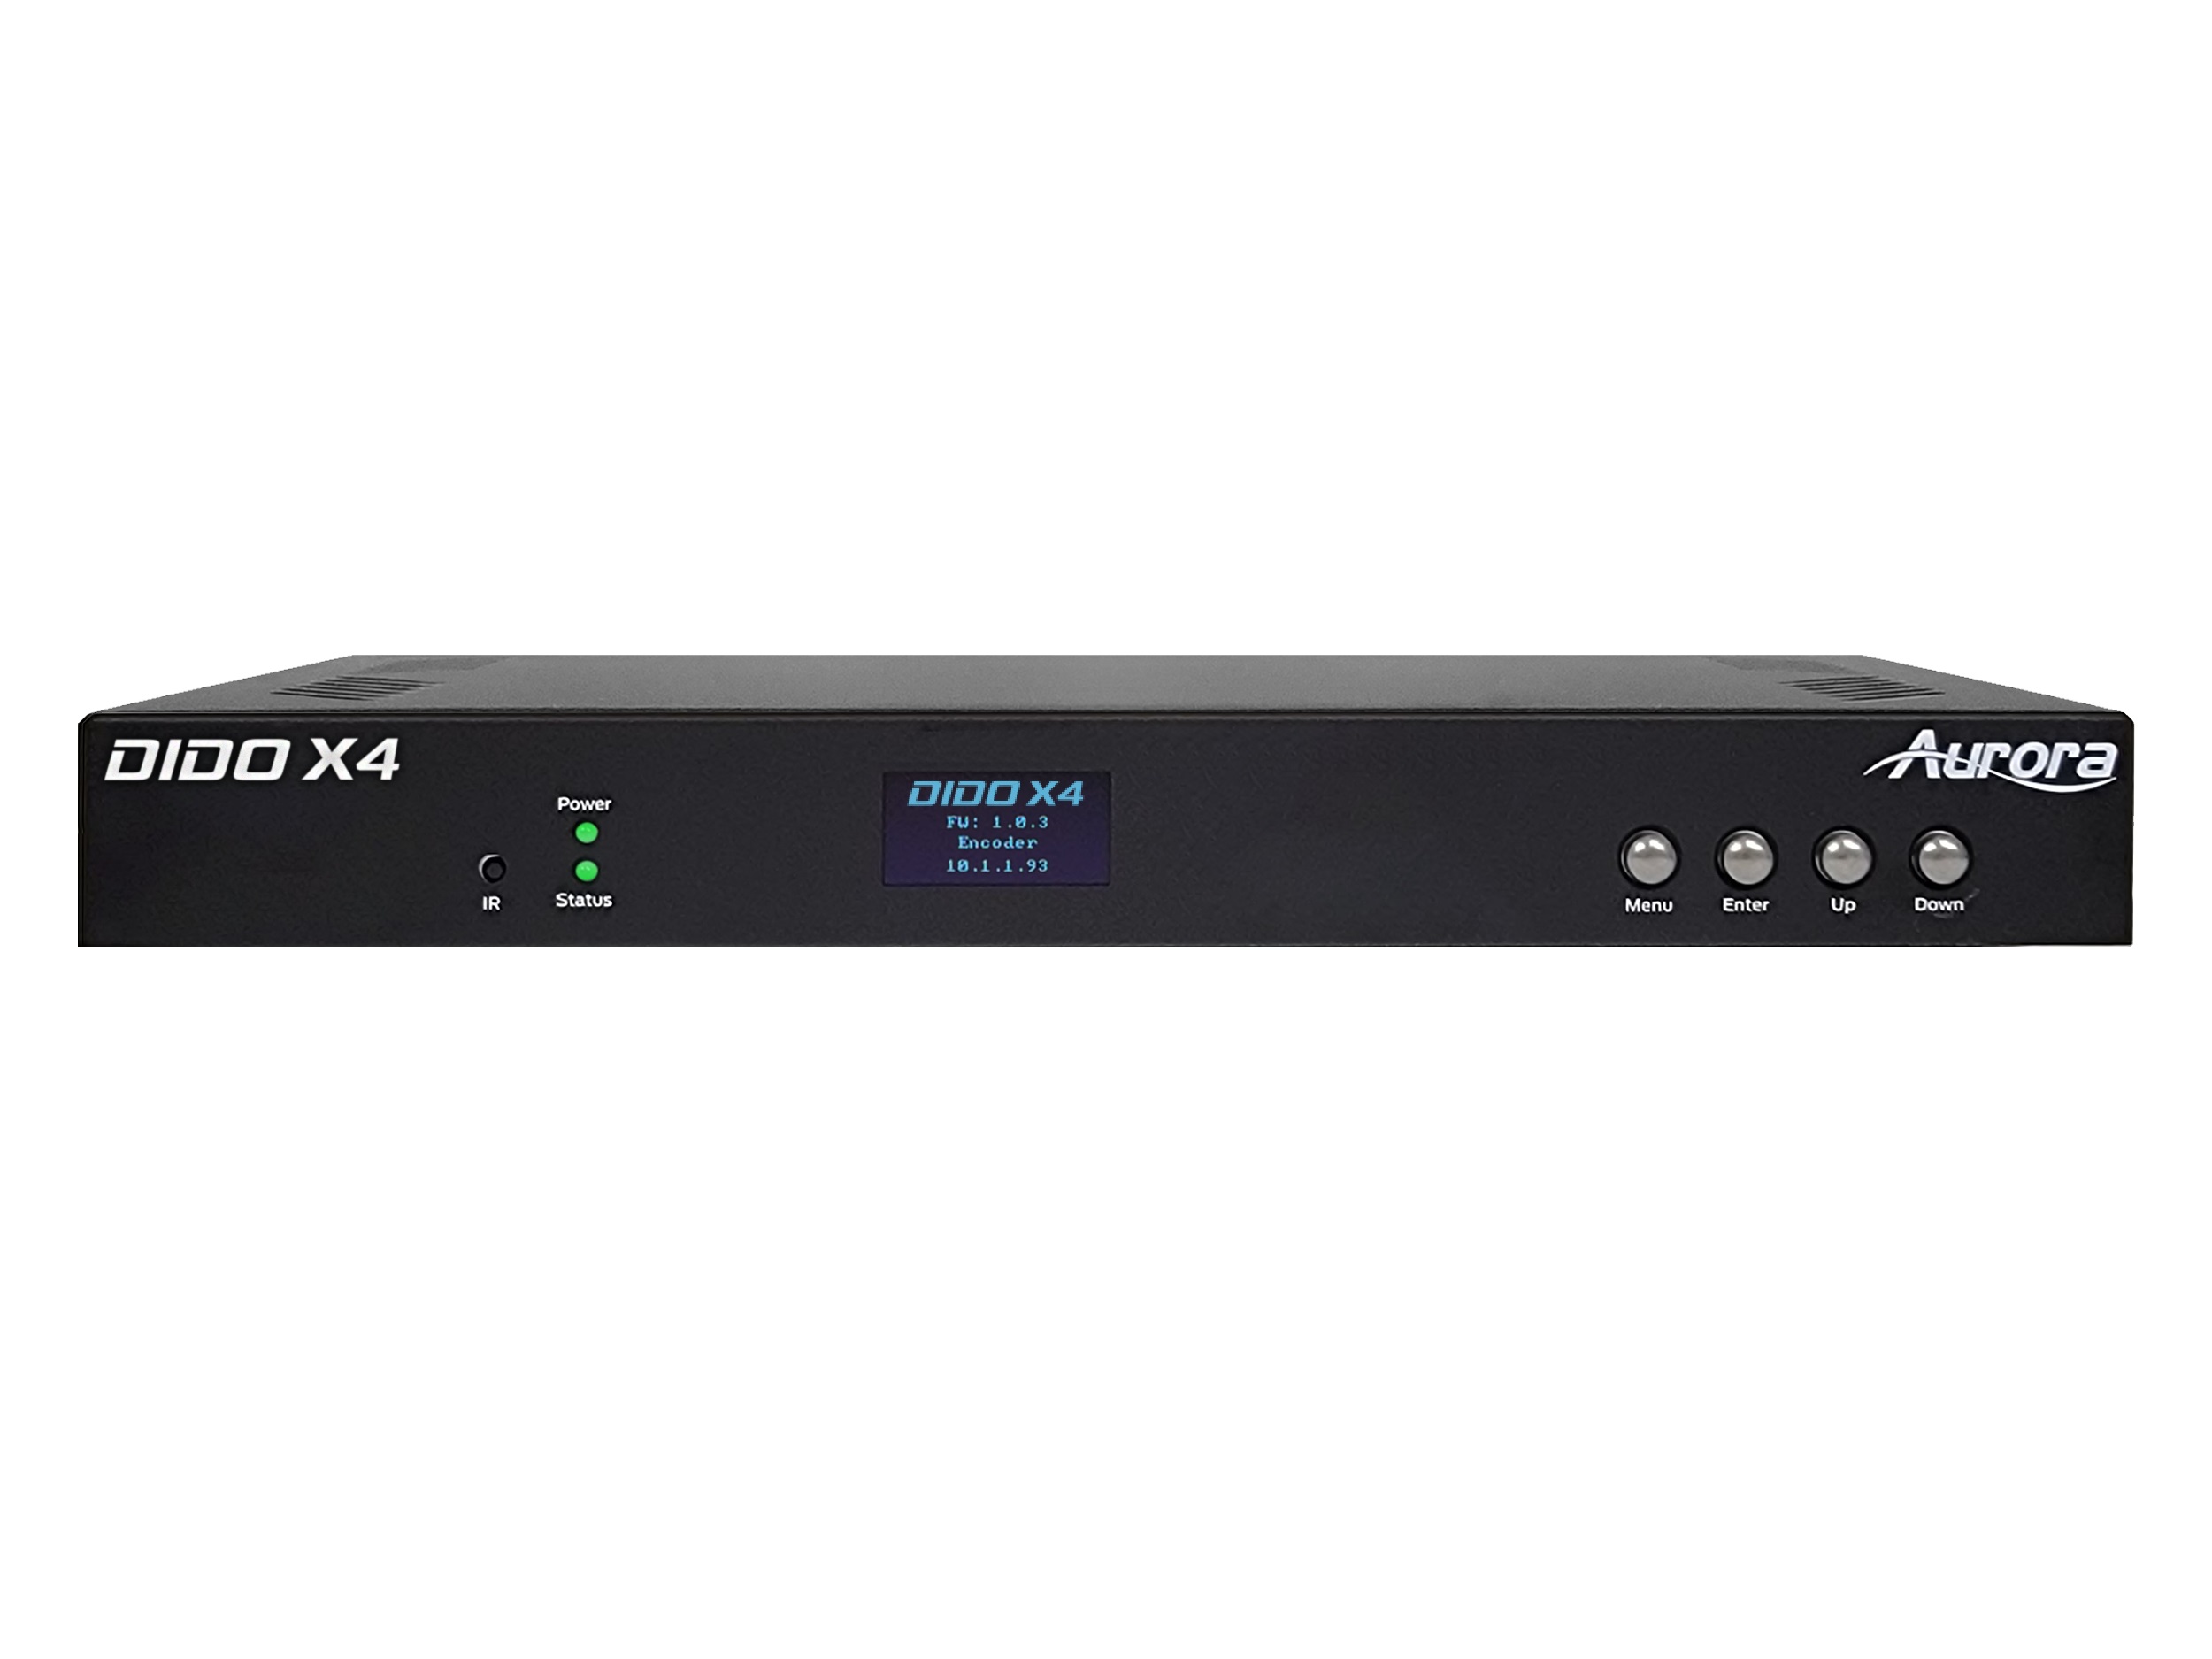 DIDO-X4 4x4 Scaler Matrix Processor with USB Capture Output by Aurora Multimedia